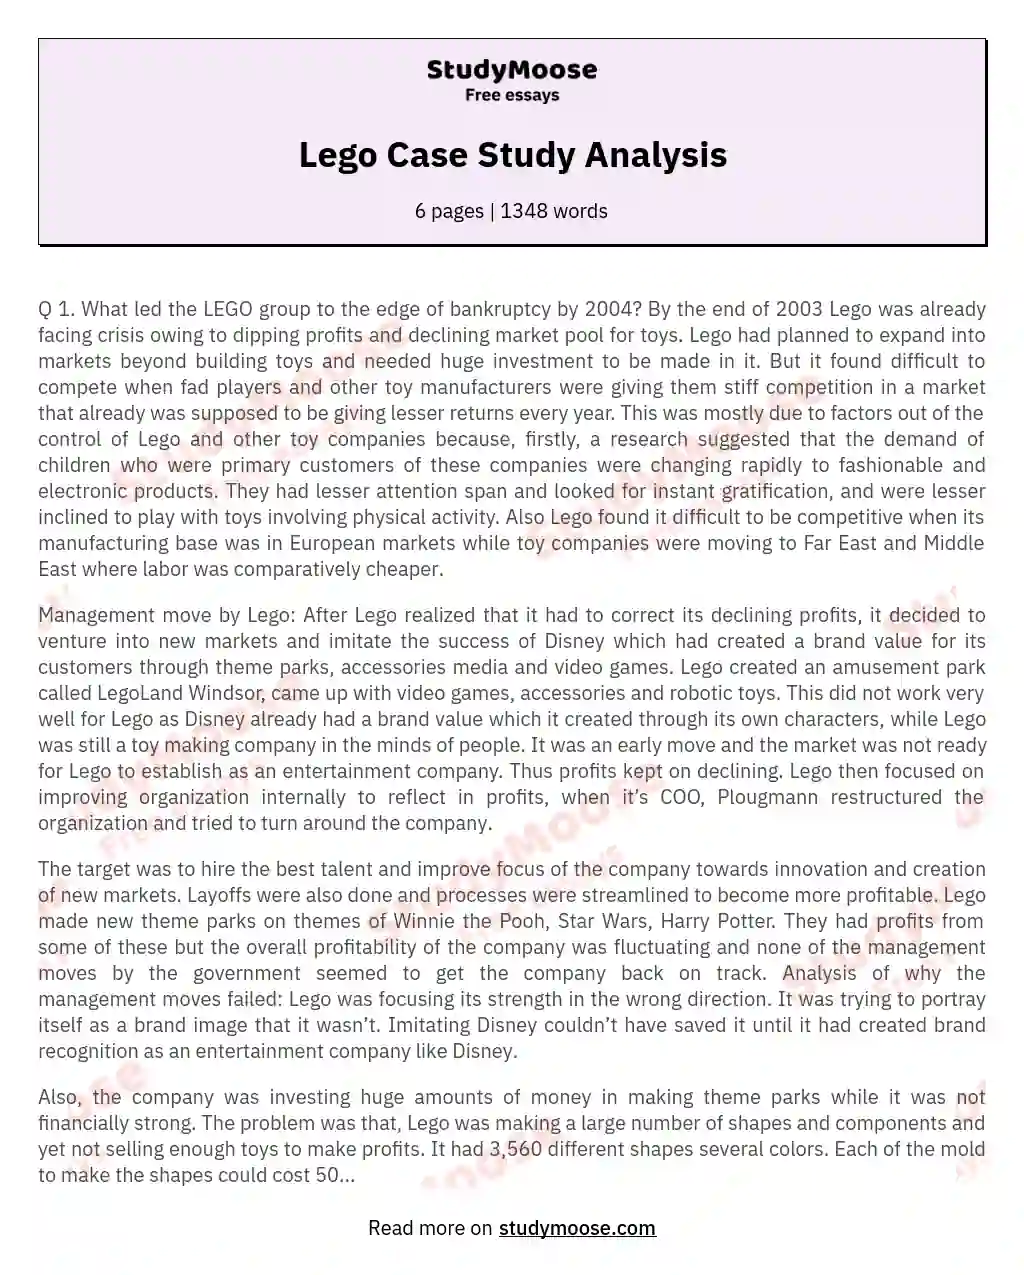 Lego Case Study Analysis essay